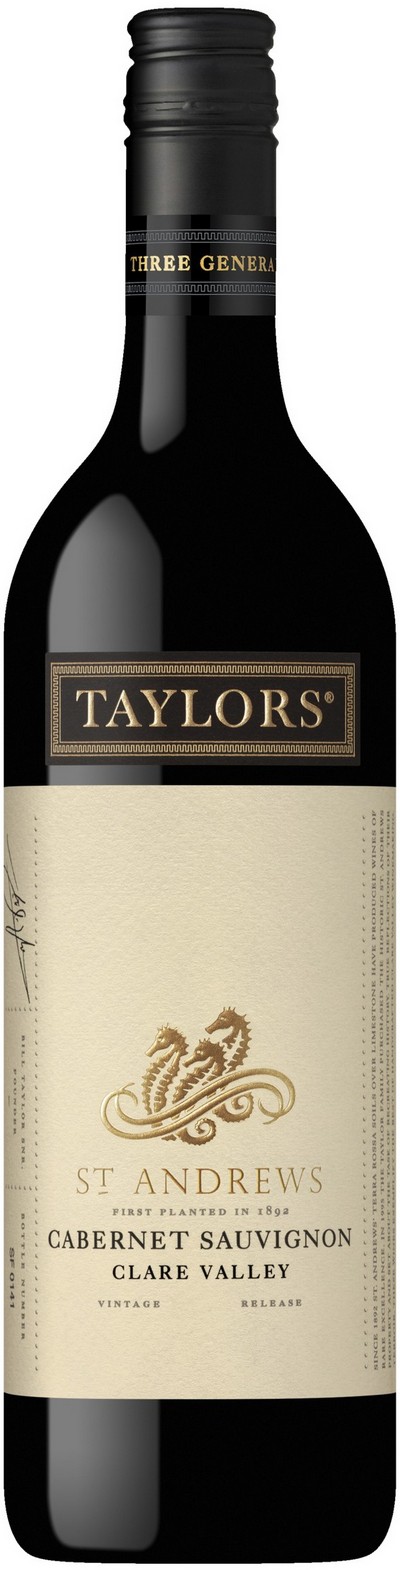 taylors-st-andrews-cabernet-sauvignon-2016